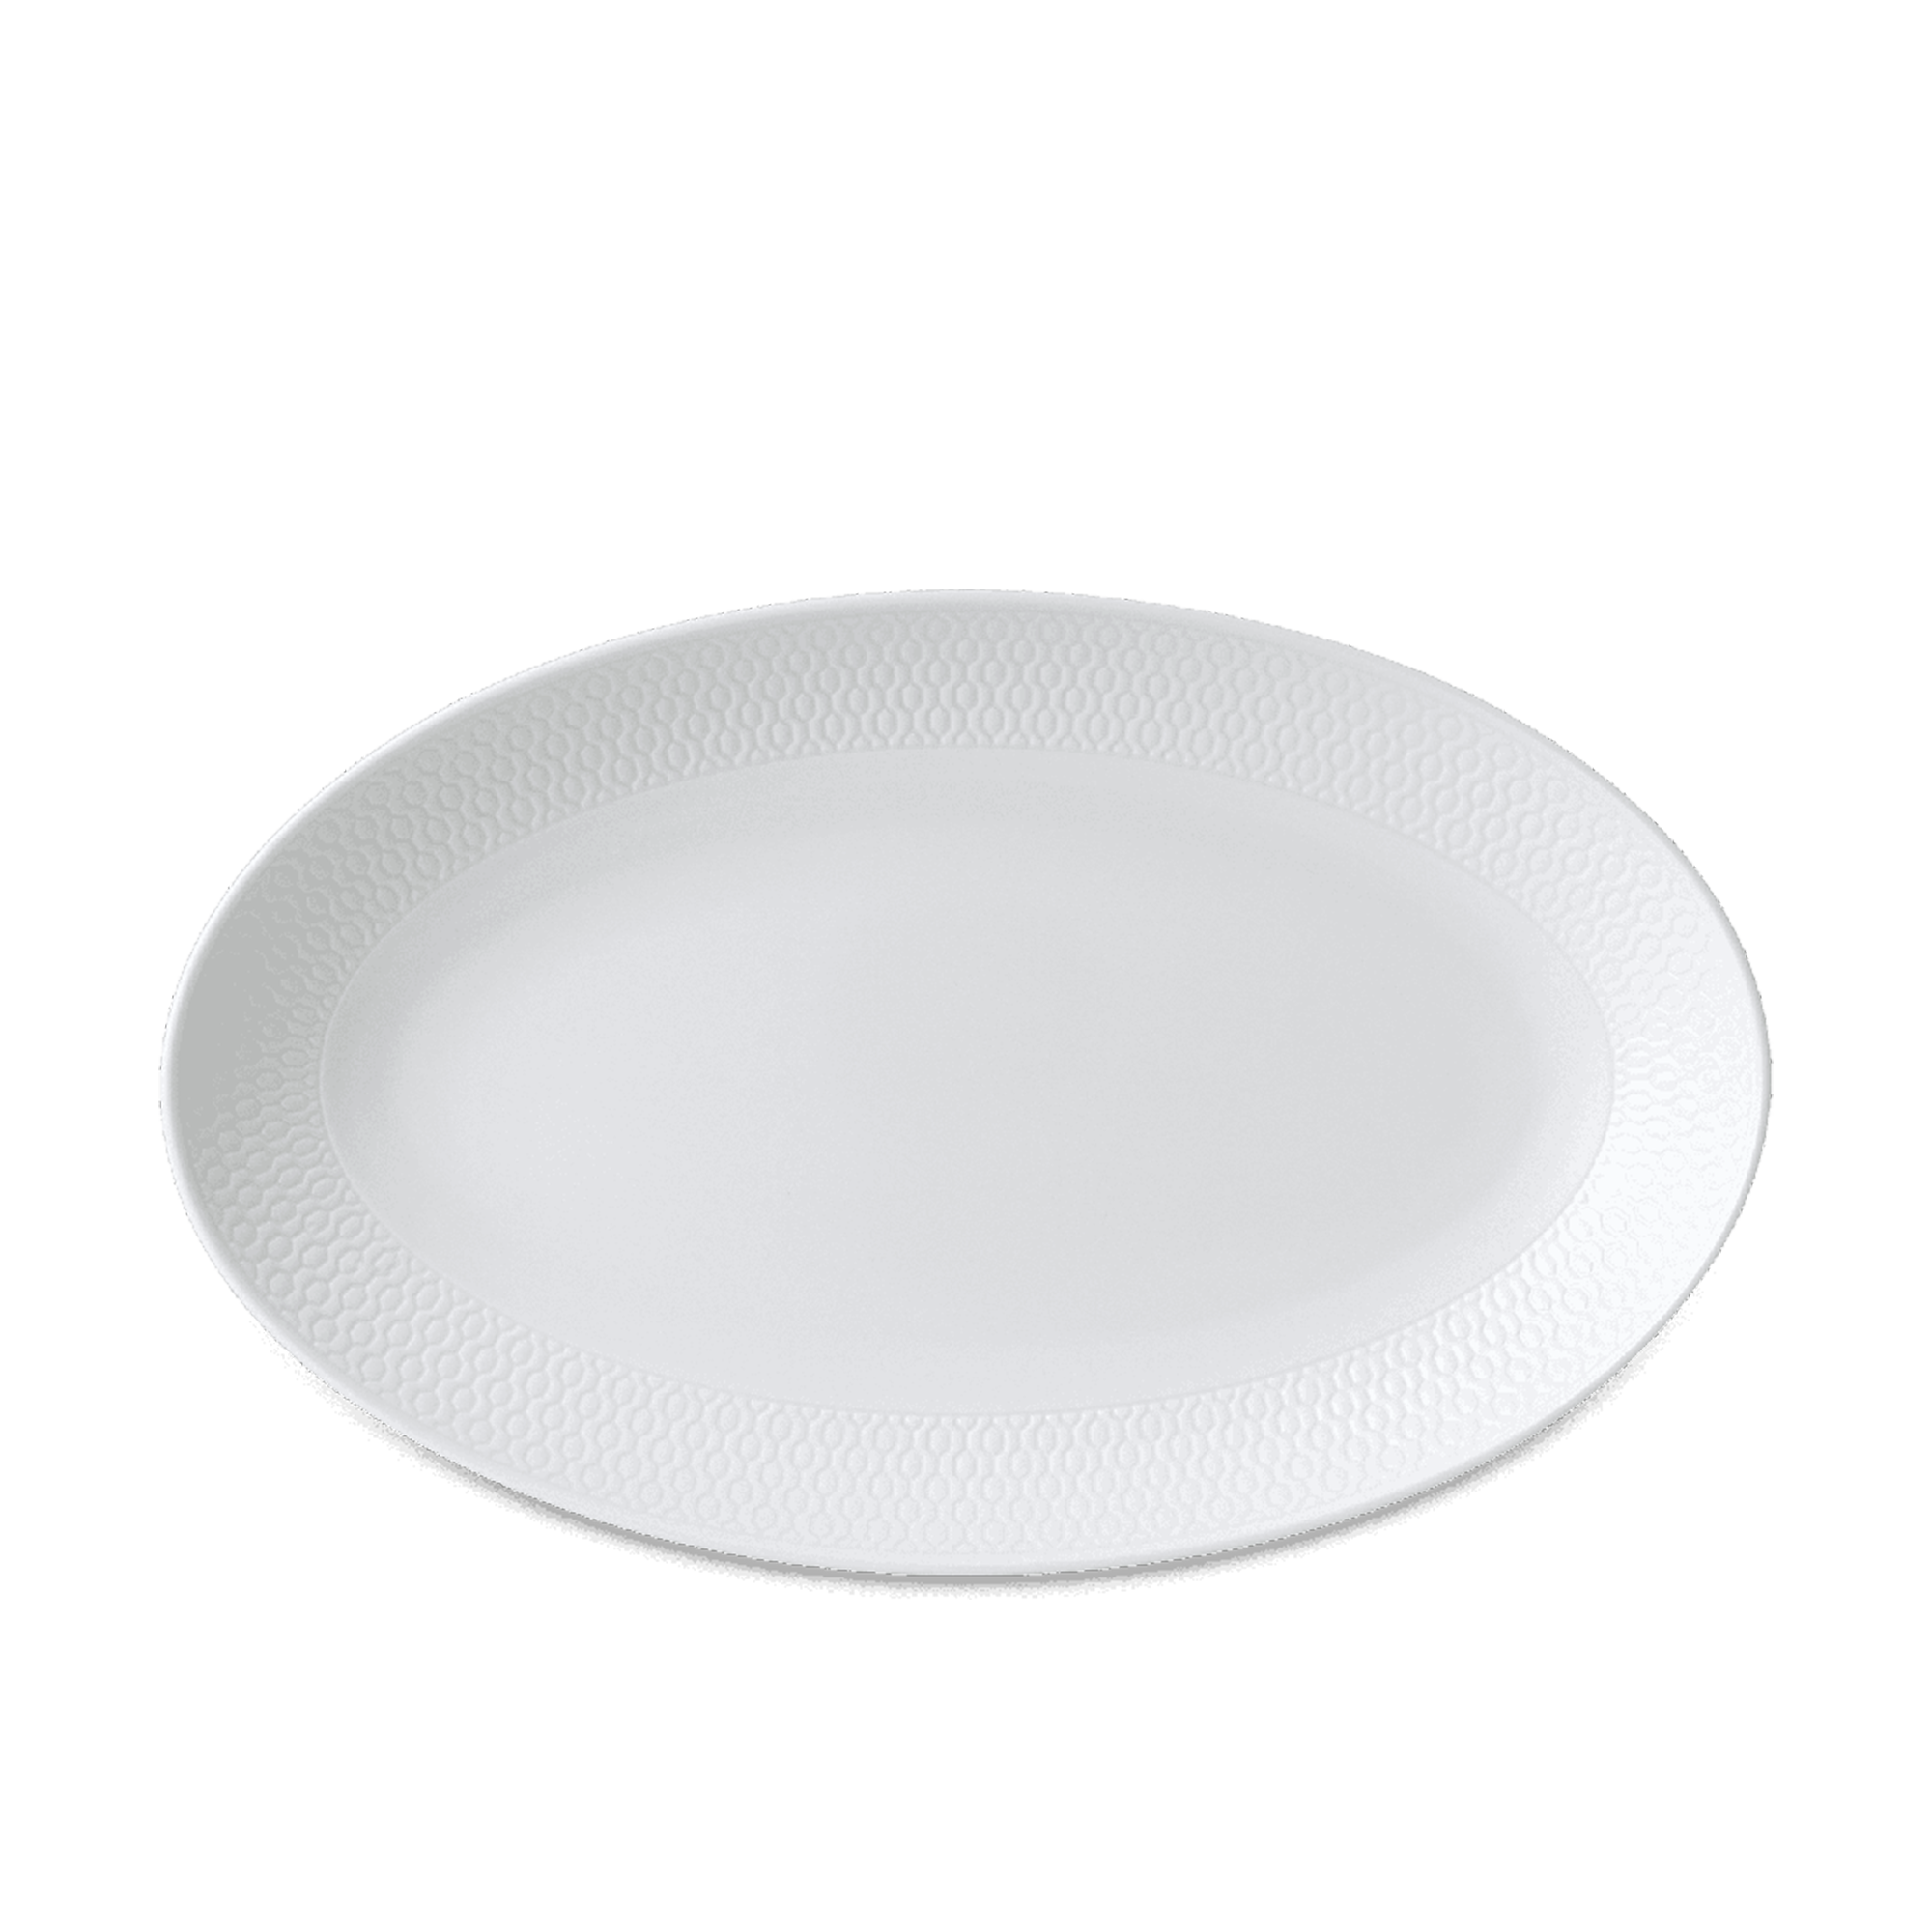 Gio Serving Platter